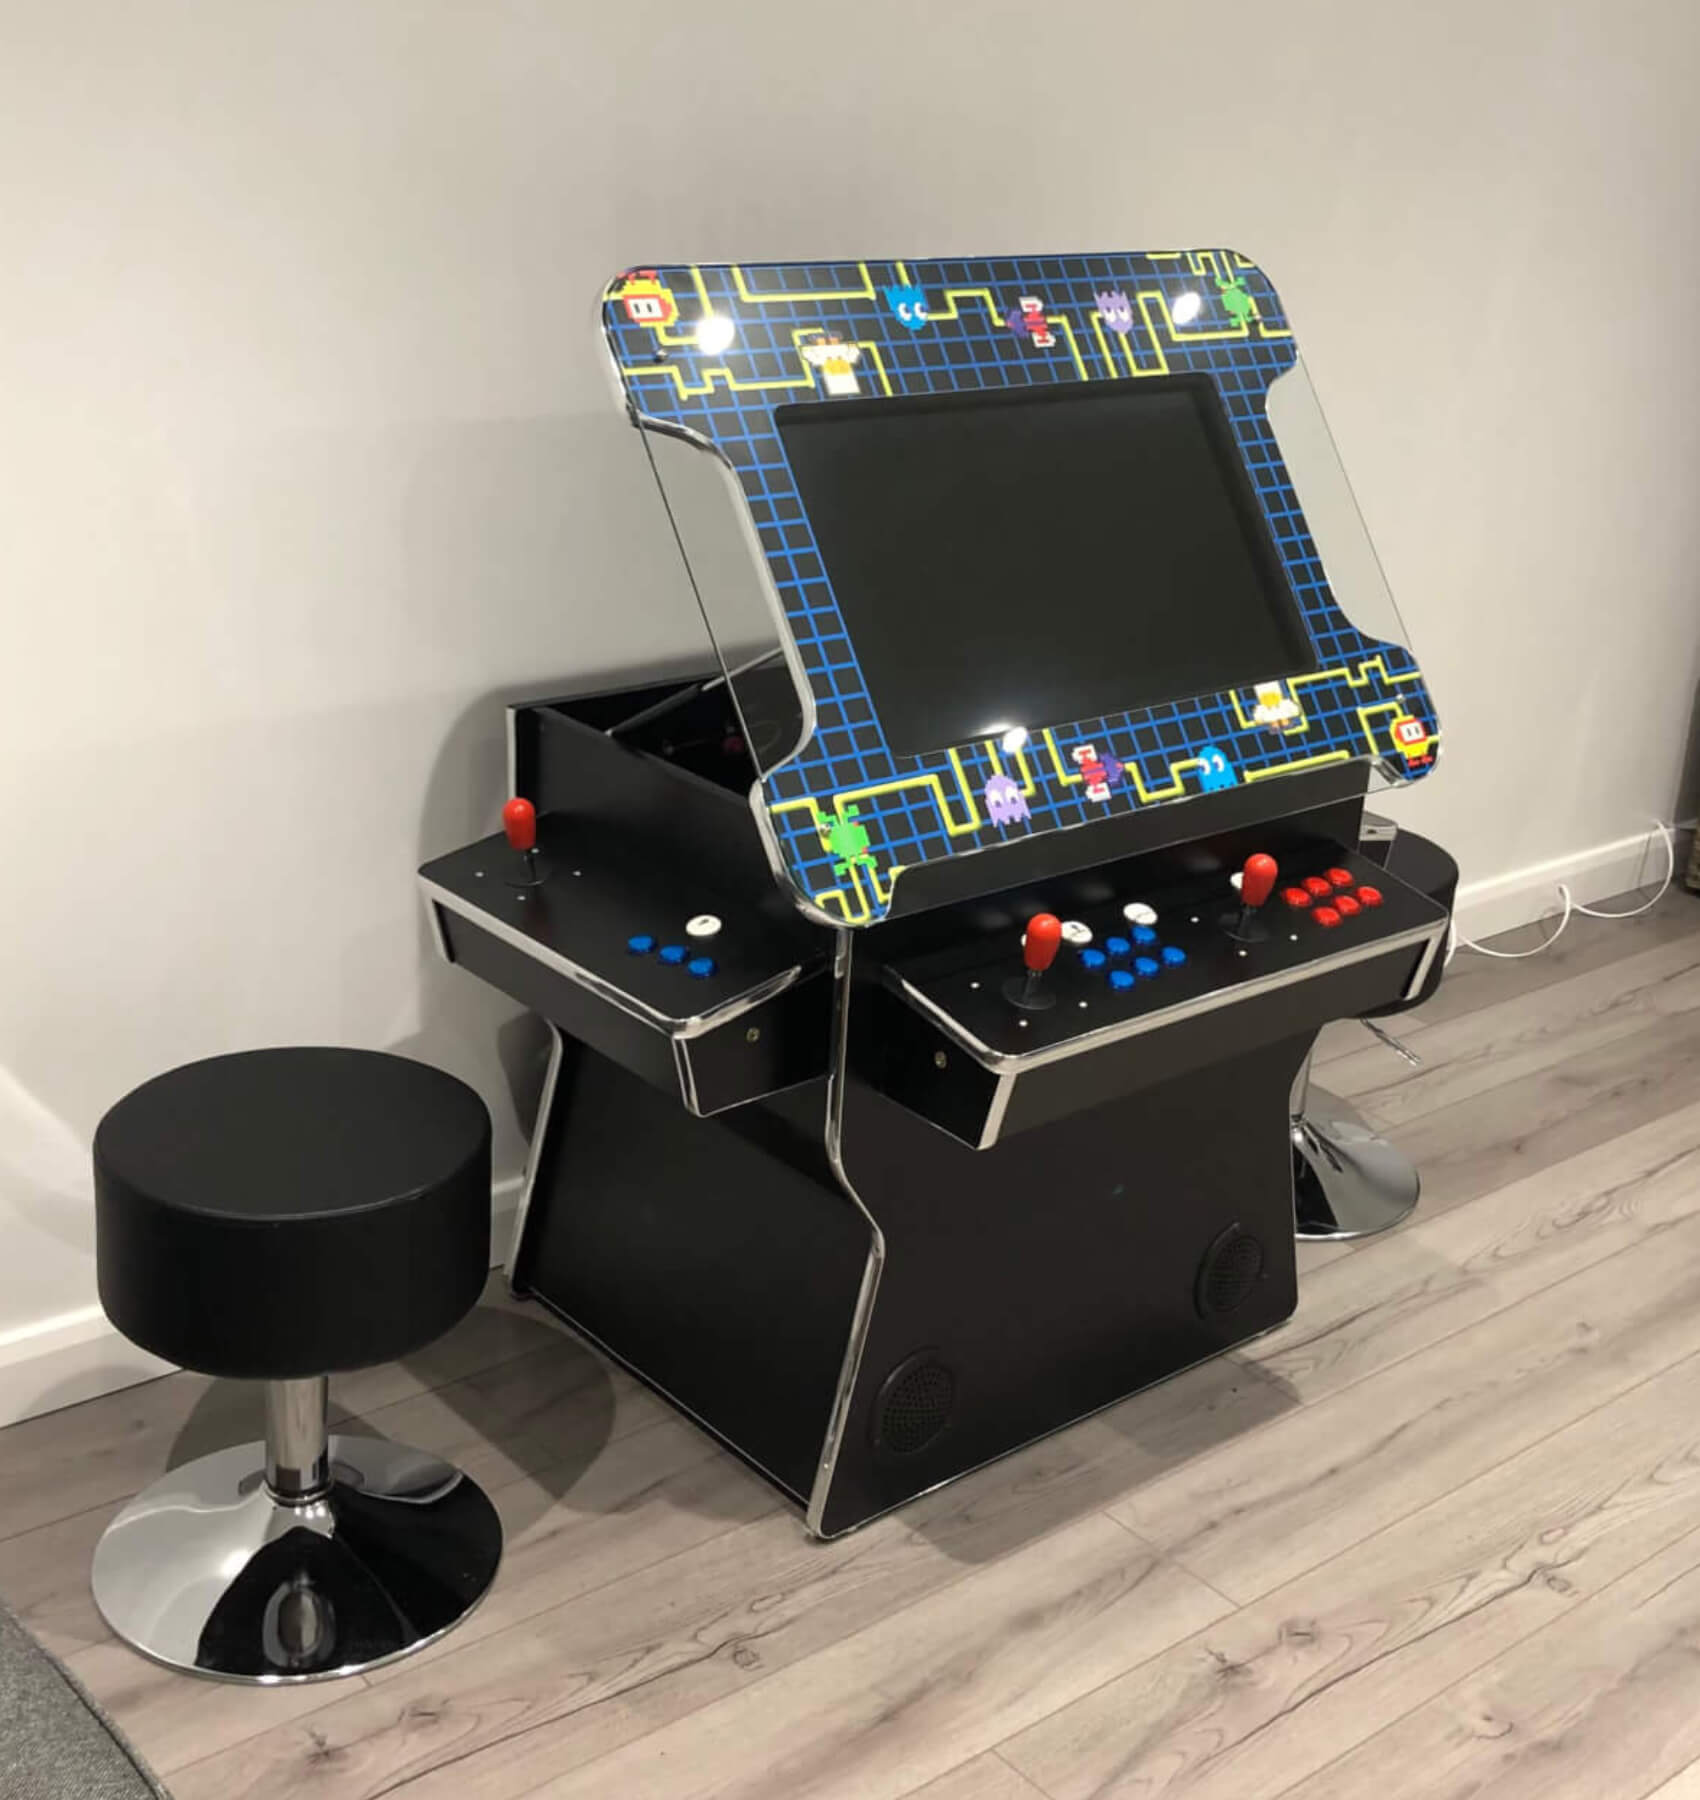 Galaxy MultiGame Tabletop Arcade Machine